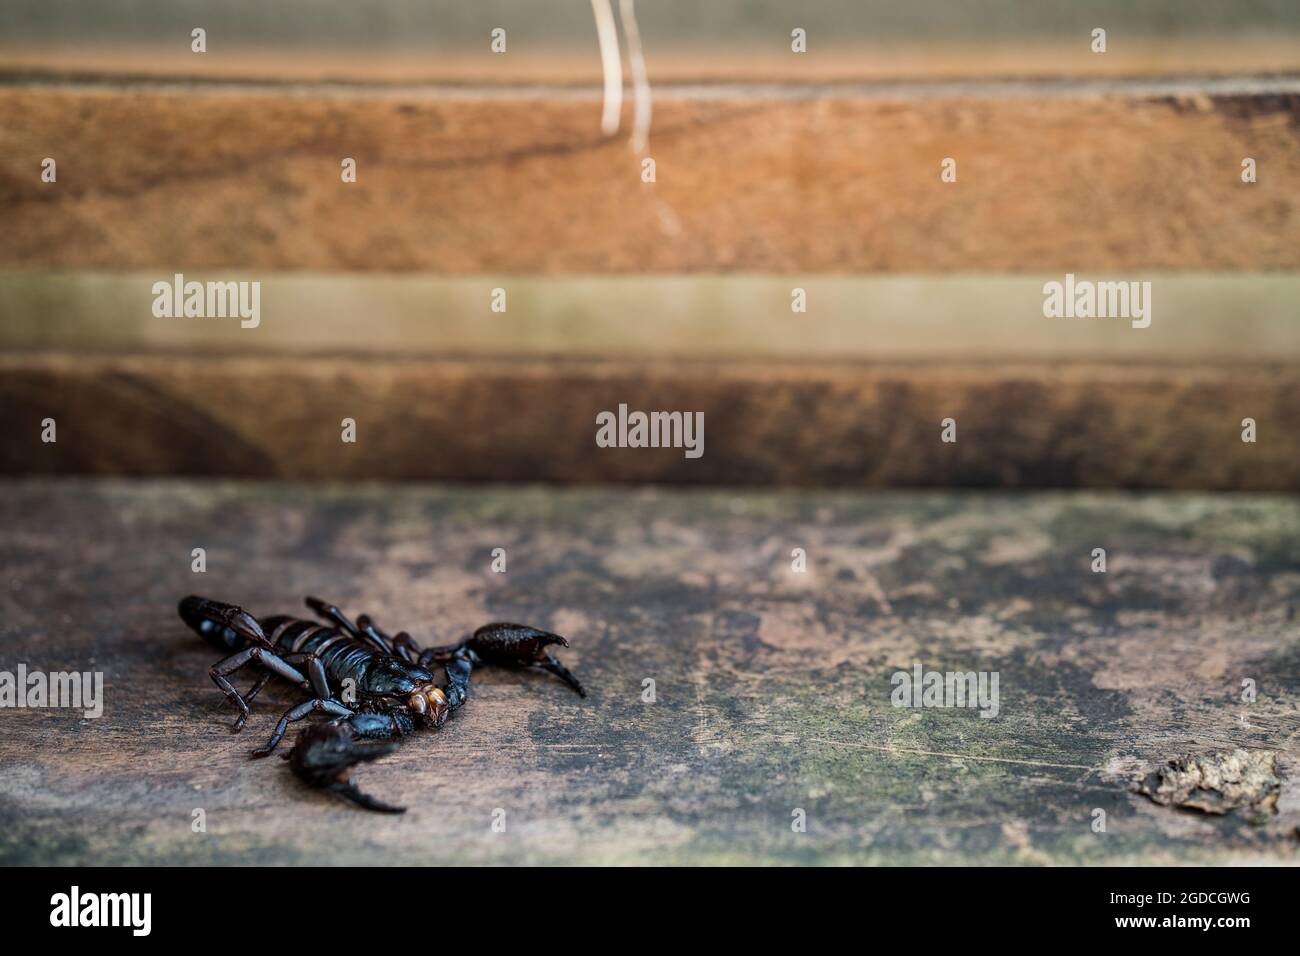 Single black scorpion on a rock surface Stock Photo